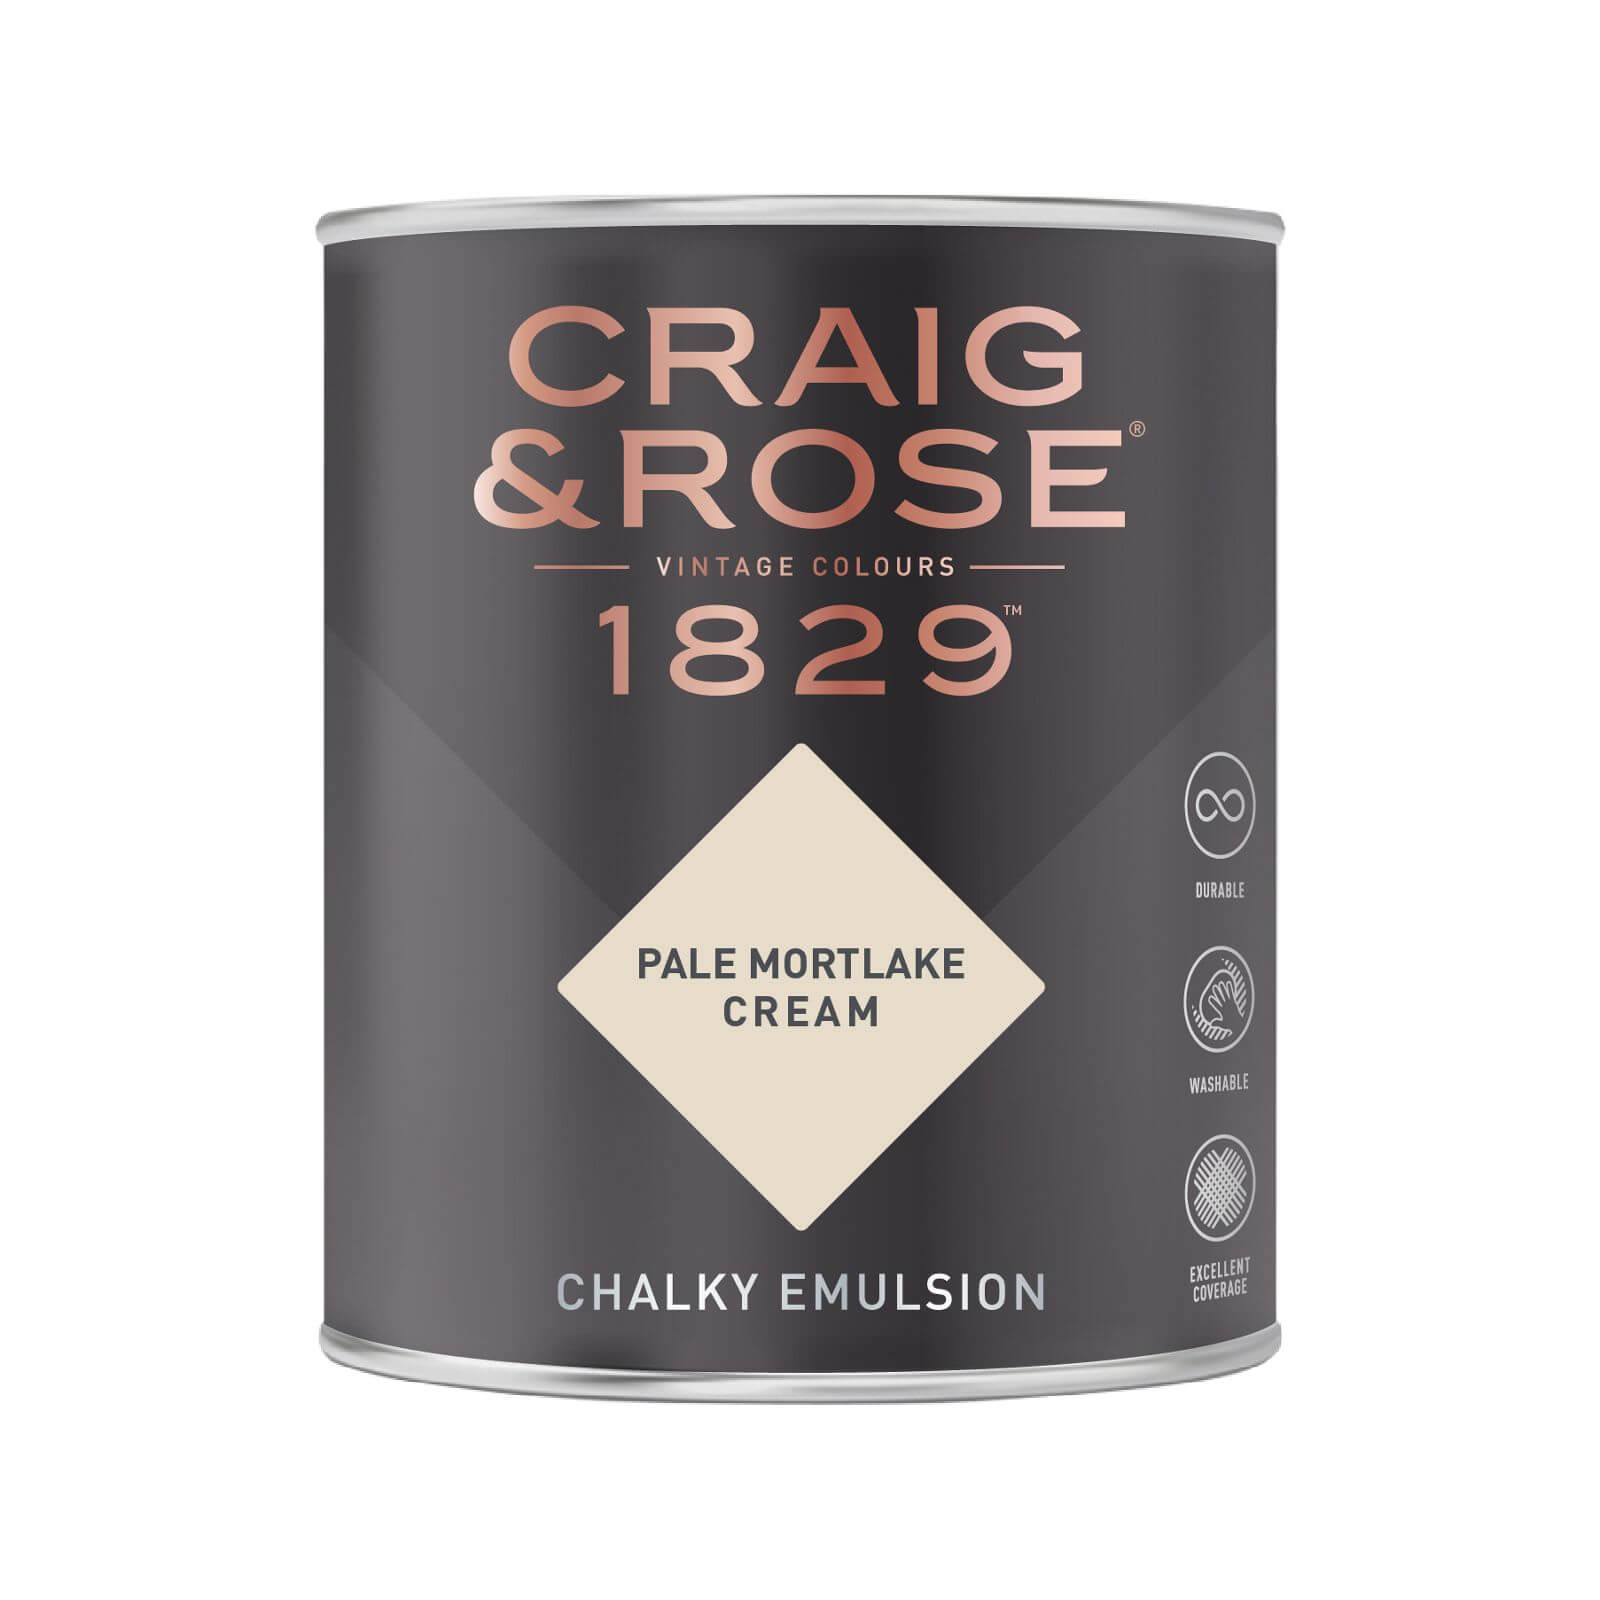 Craig & Rose 1829 Chalky Emulsion Paint Pale Mortlake Cream - 750ml